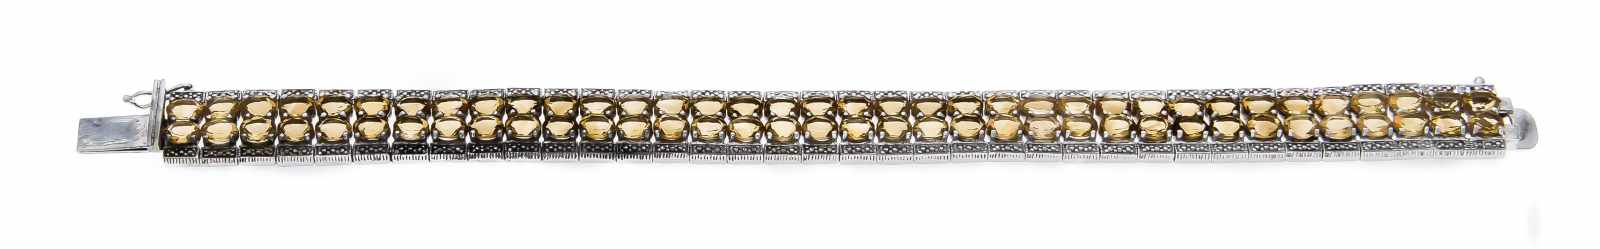 Citrin-Armband Silber 925/000 Harry Ivens mit oval fac. Citrinen 4,5 x 3 mm, Kastenschließe mit SI- - Image 2 of 2